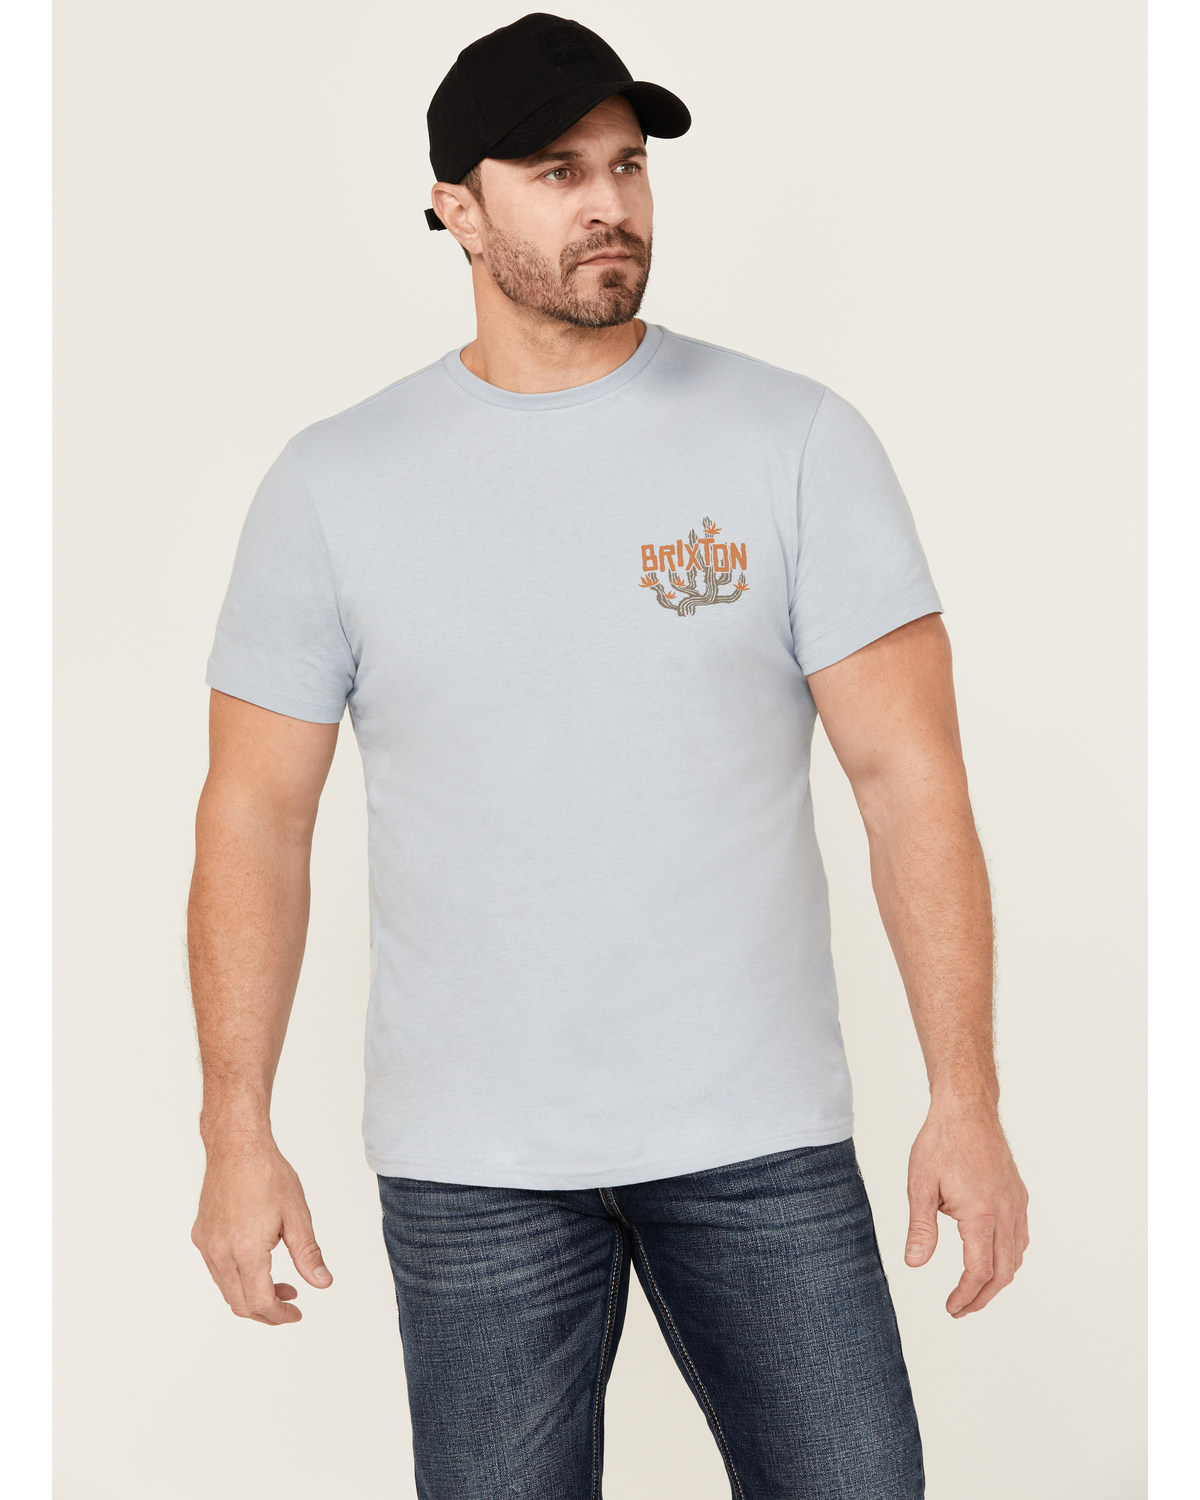 Brixton Men's Valley Cactus Short Sleeve Graphic T-Shirt